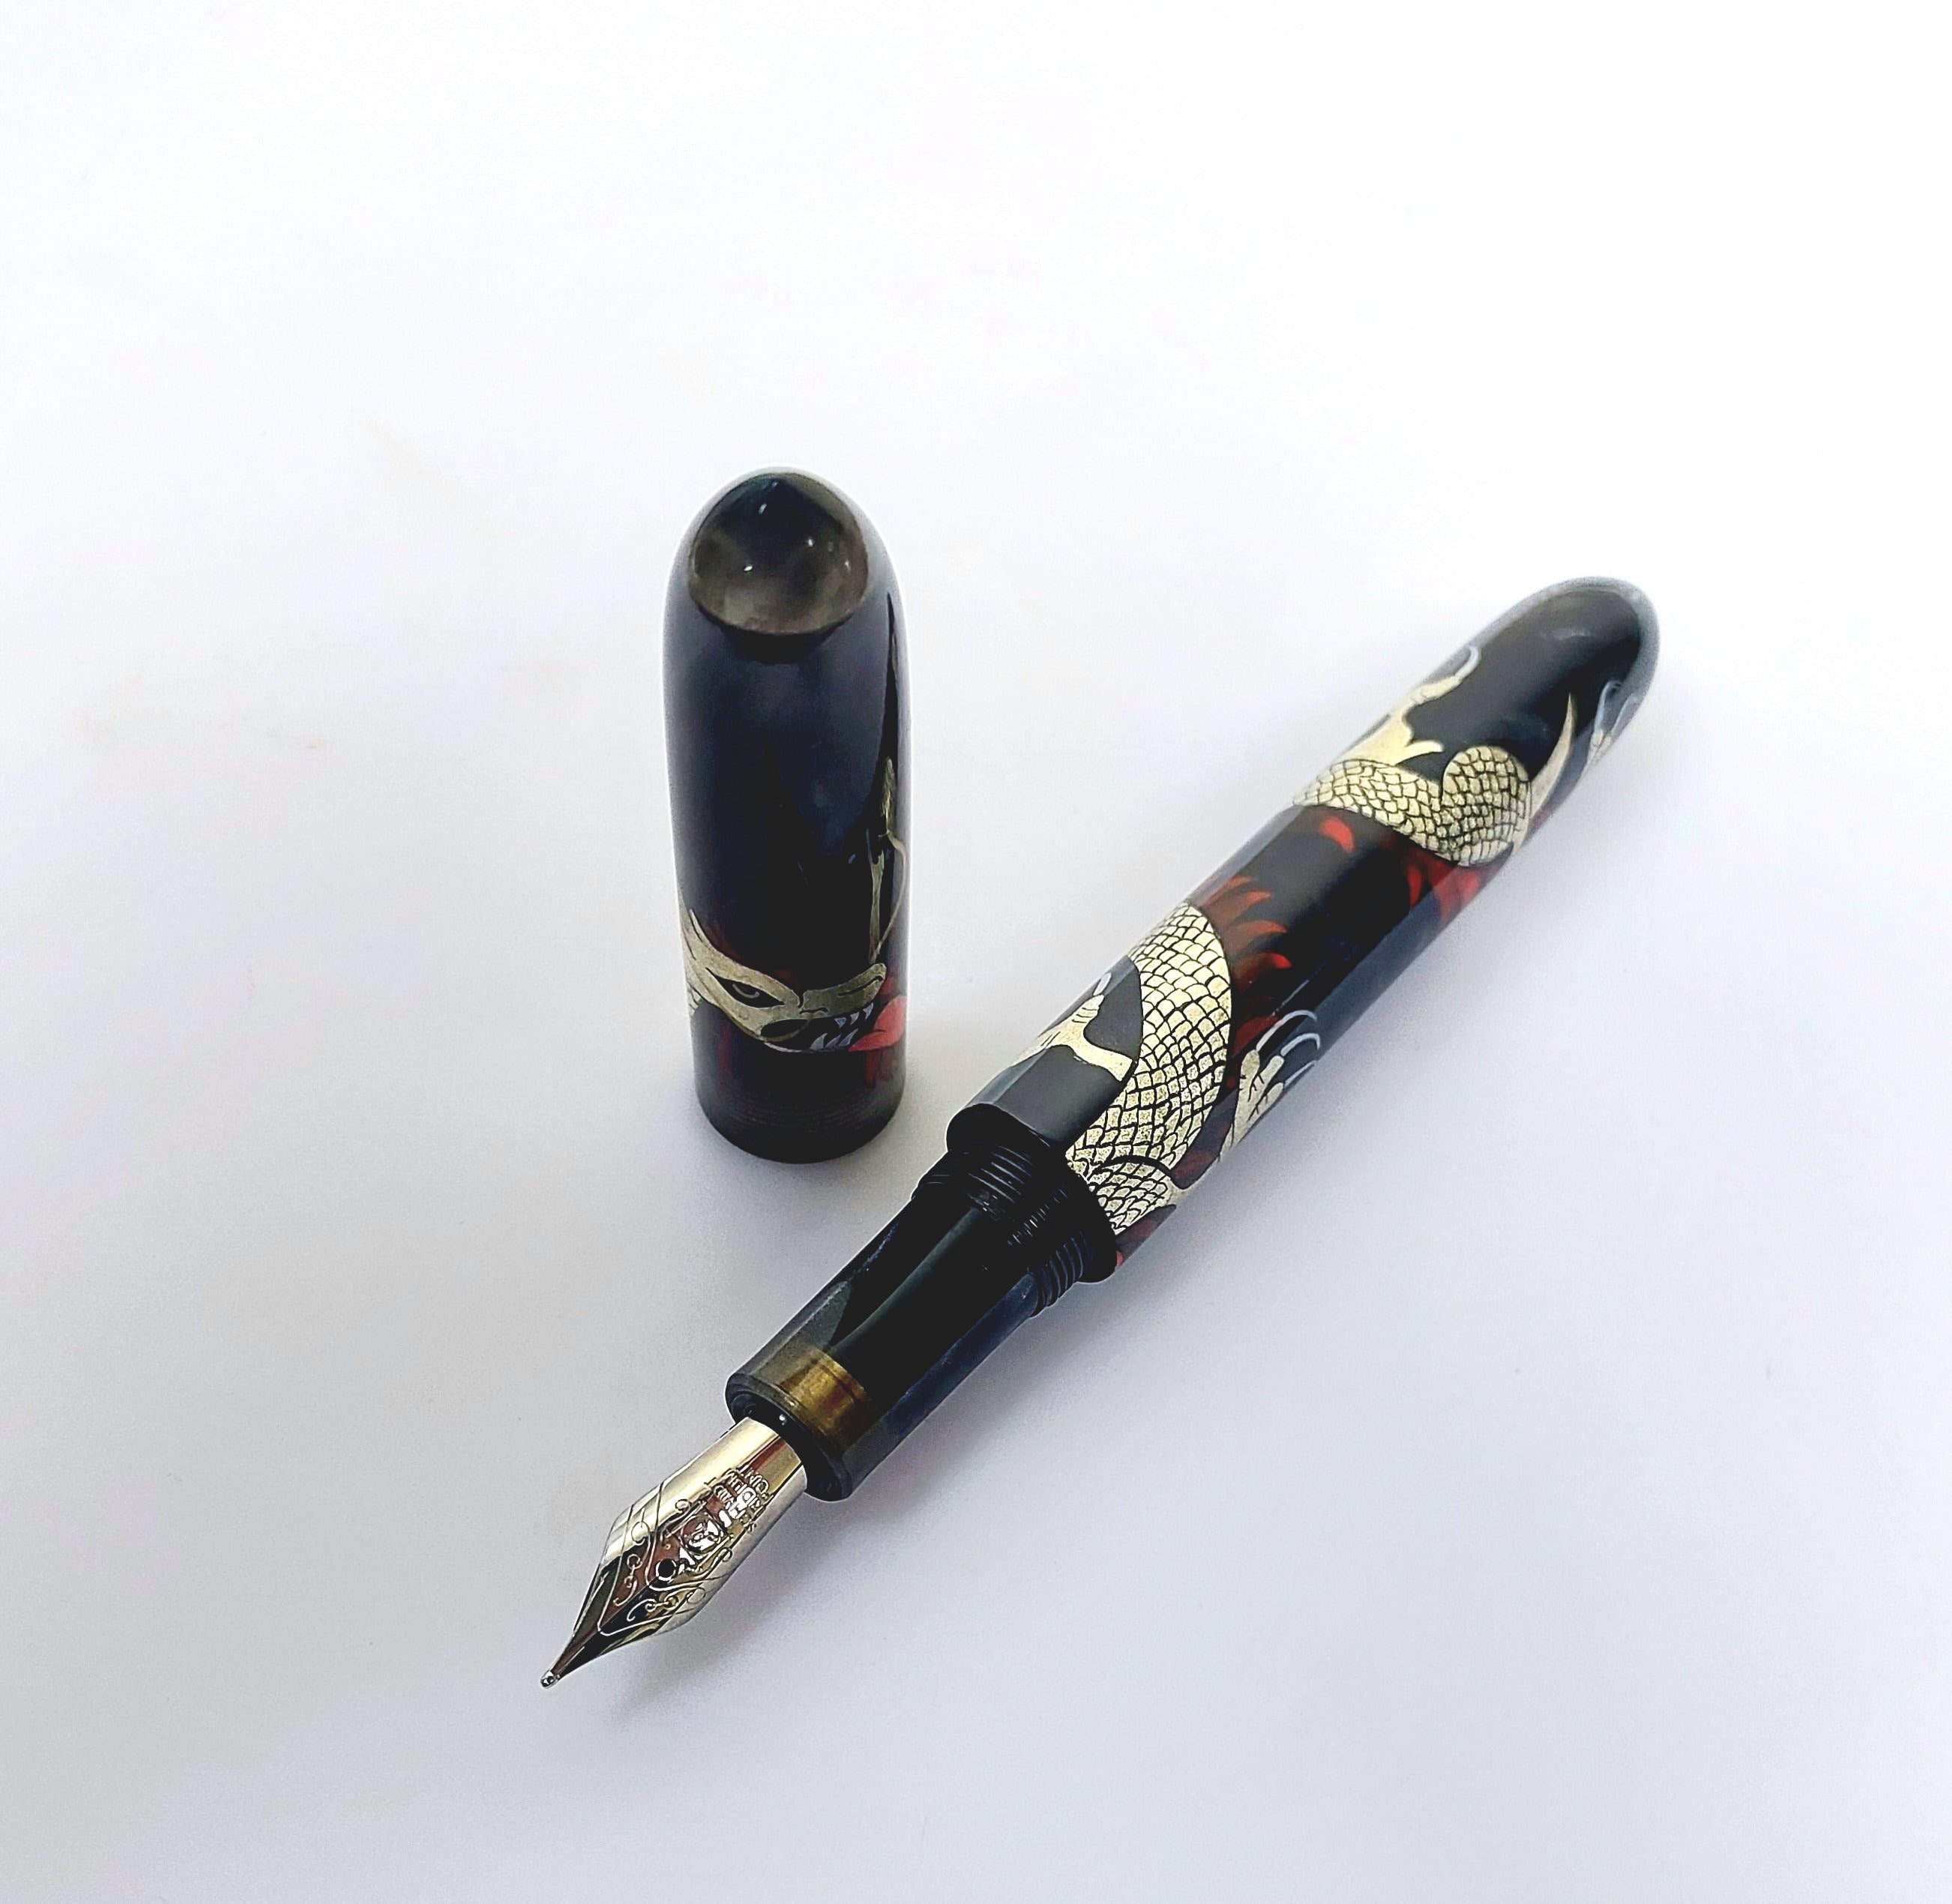 1 SET Originality Noctilucent Glass Fountain Pen Fluorescence Watercolor  Manual Dip Pen Practise Calligraphy Pen